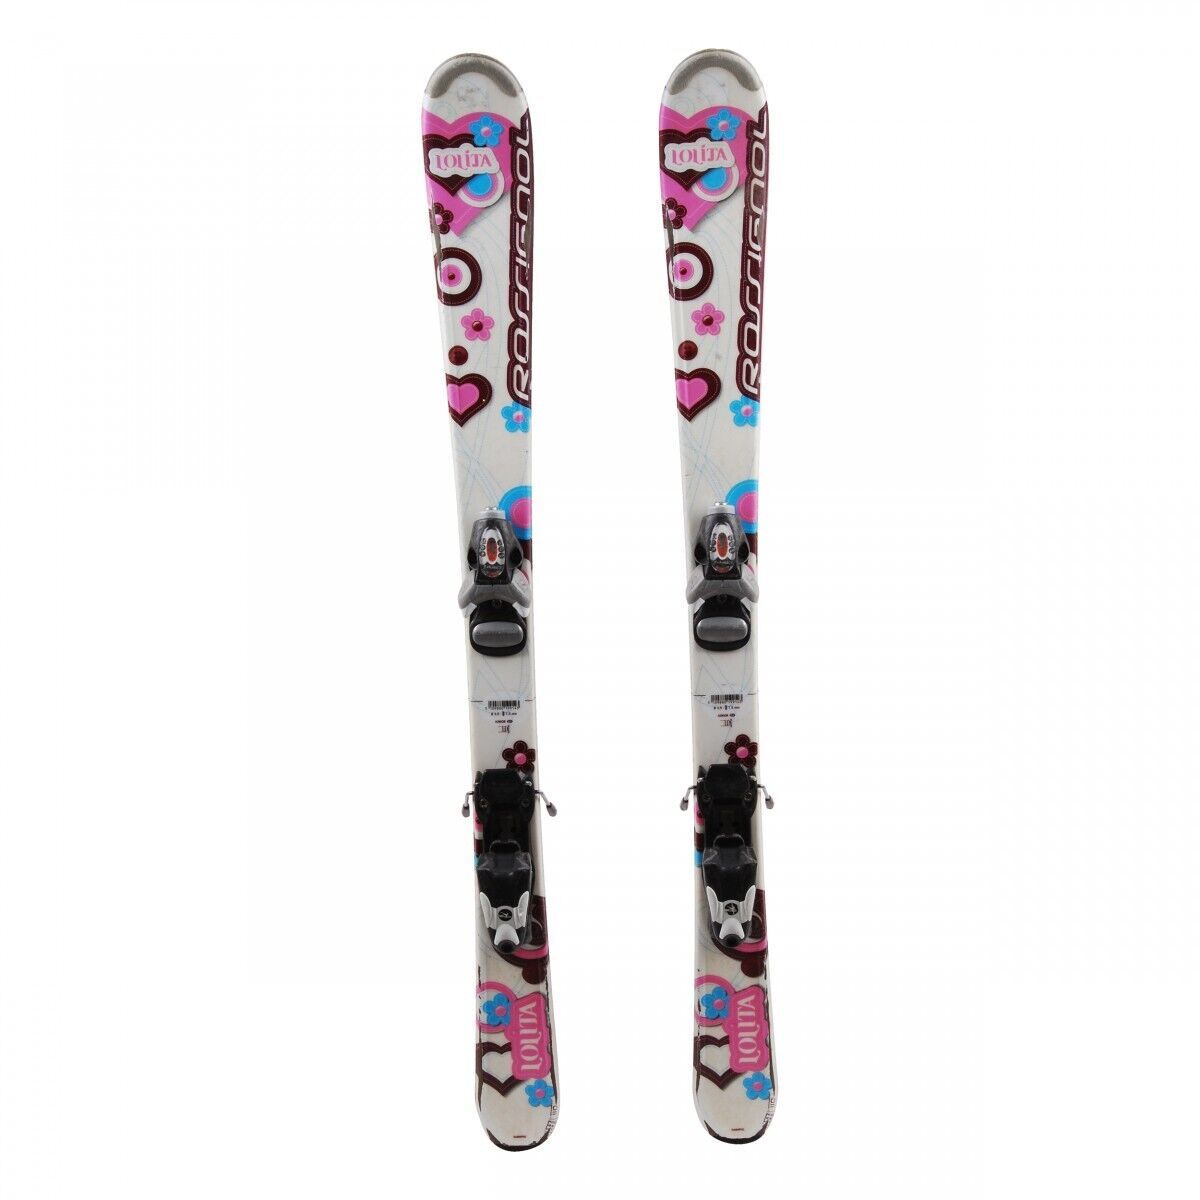 Skis d'occasion - Lolita - 110 cm 